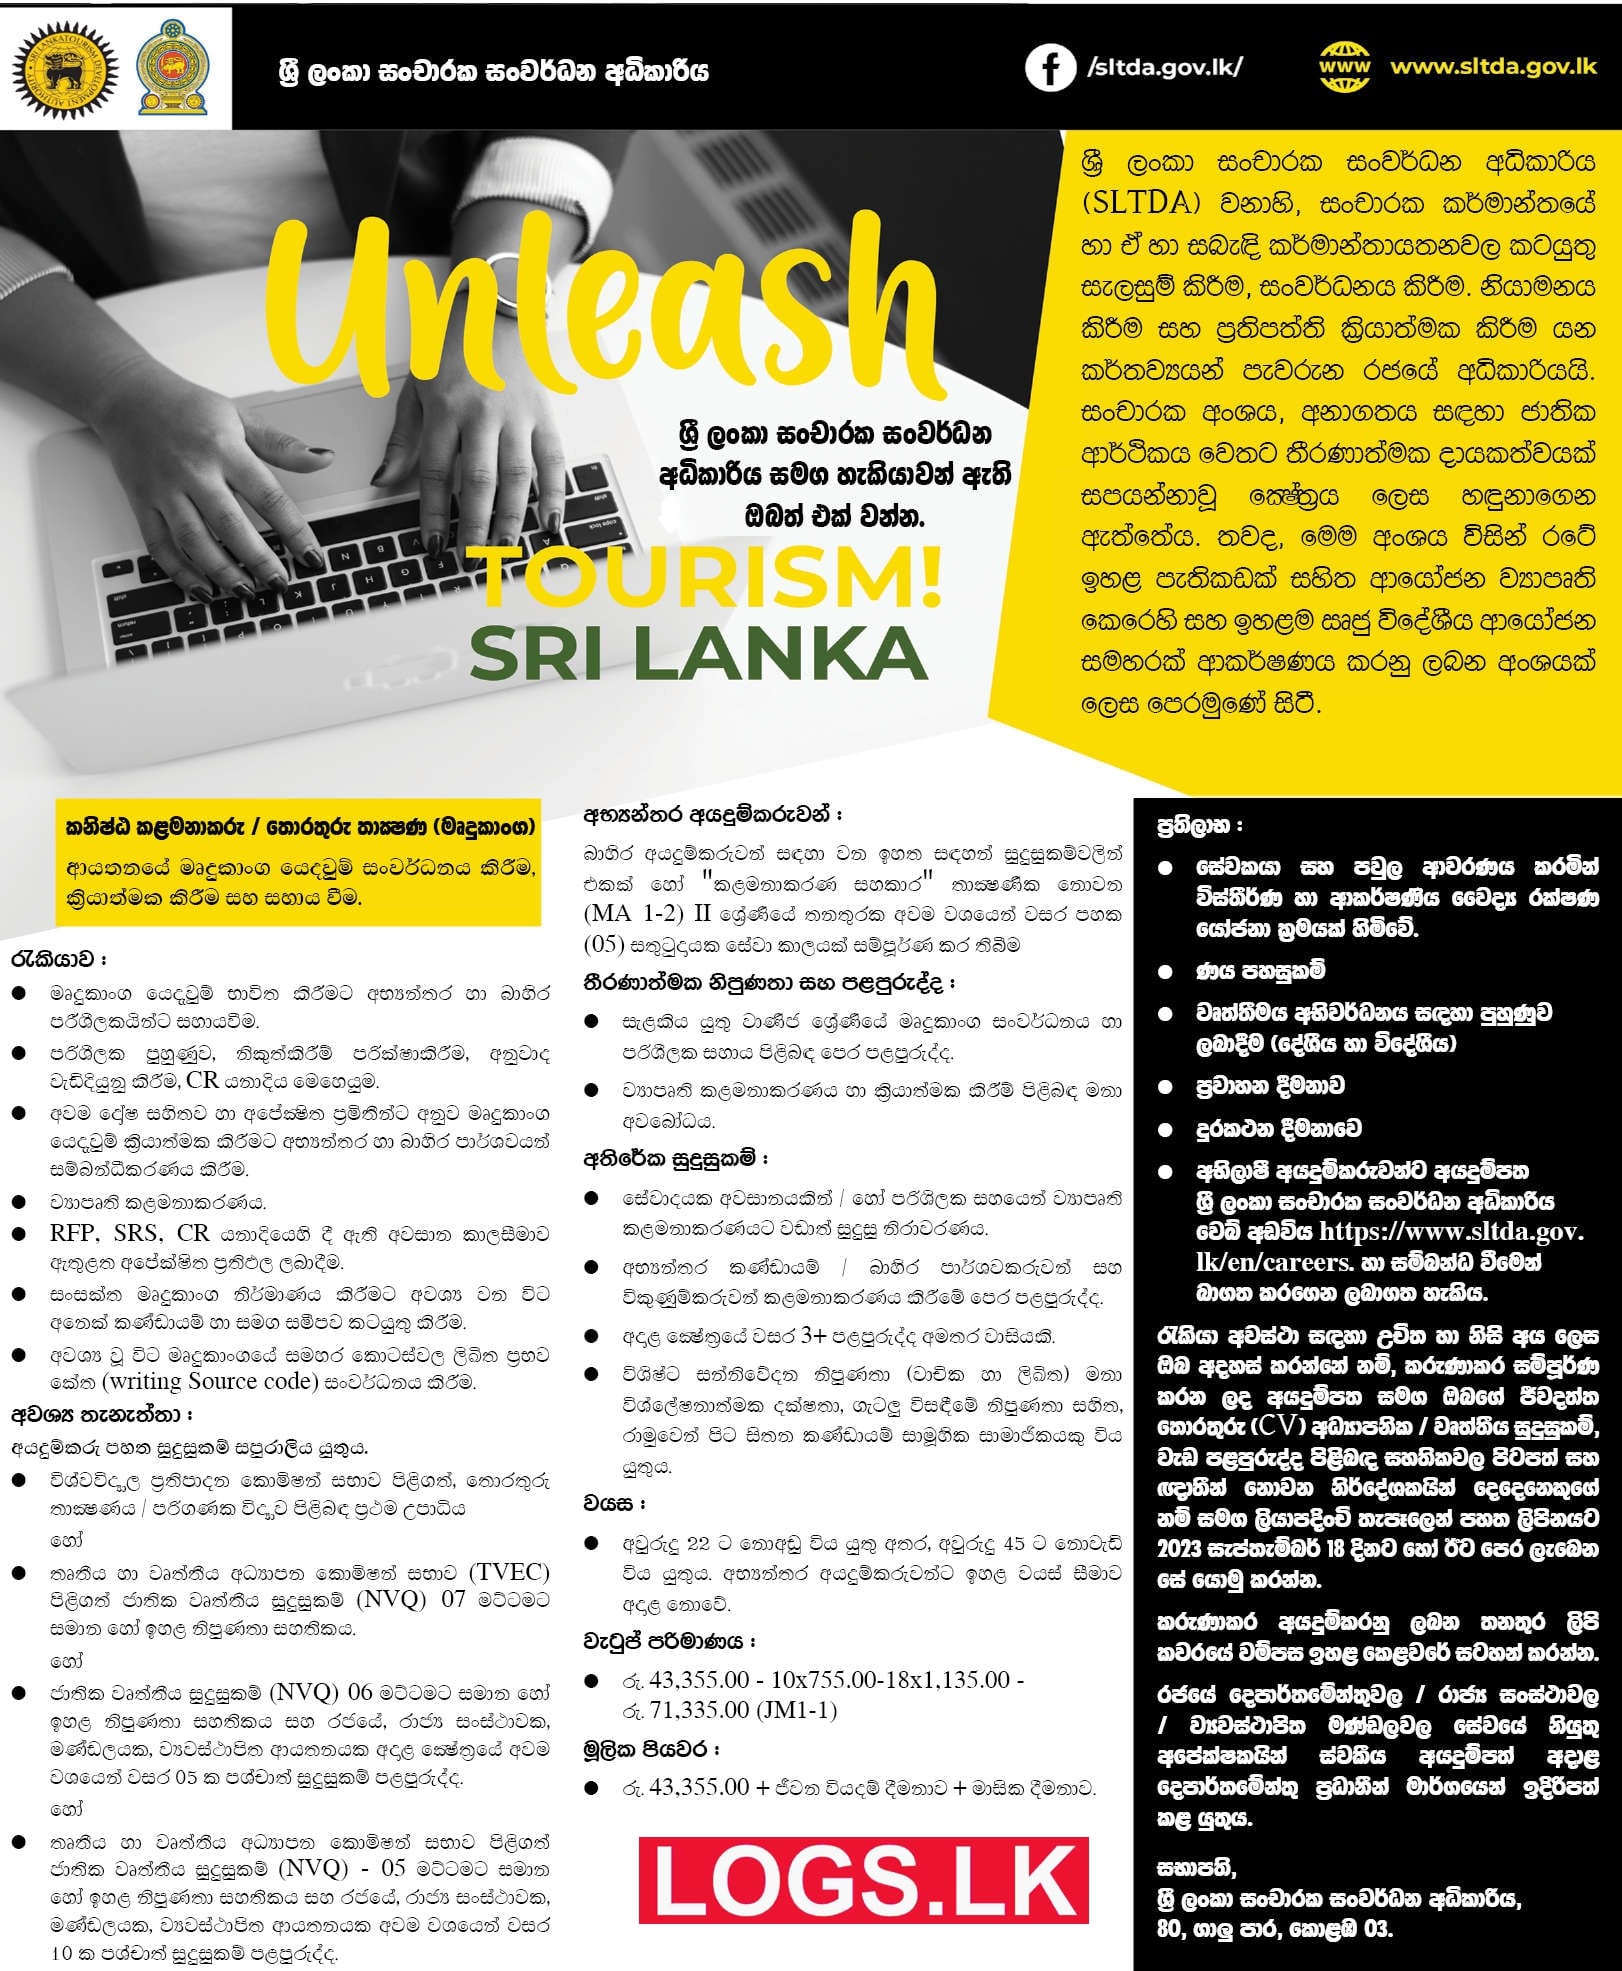 Junior Manager / IT (Software) - Sri Lanka Tourism Development Authority Vacancies 2023